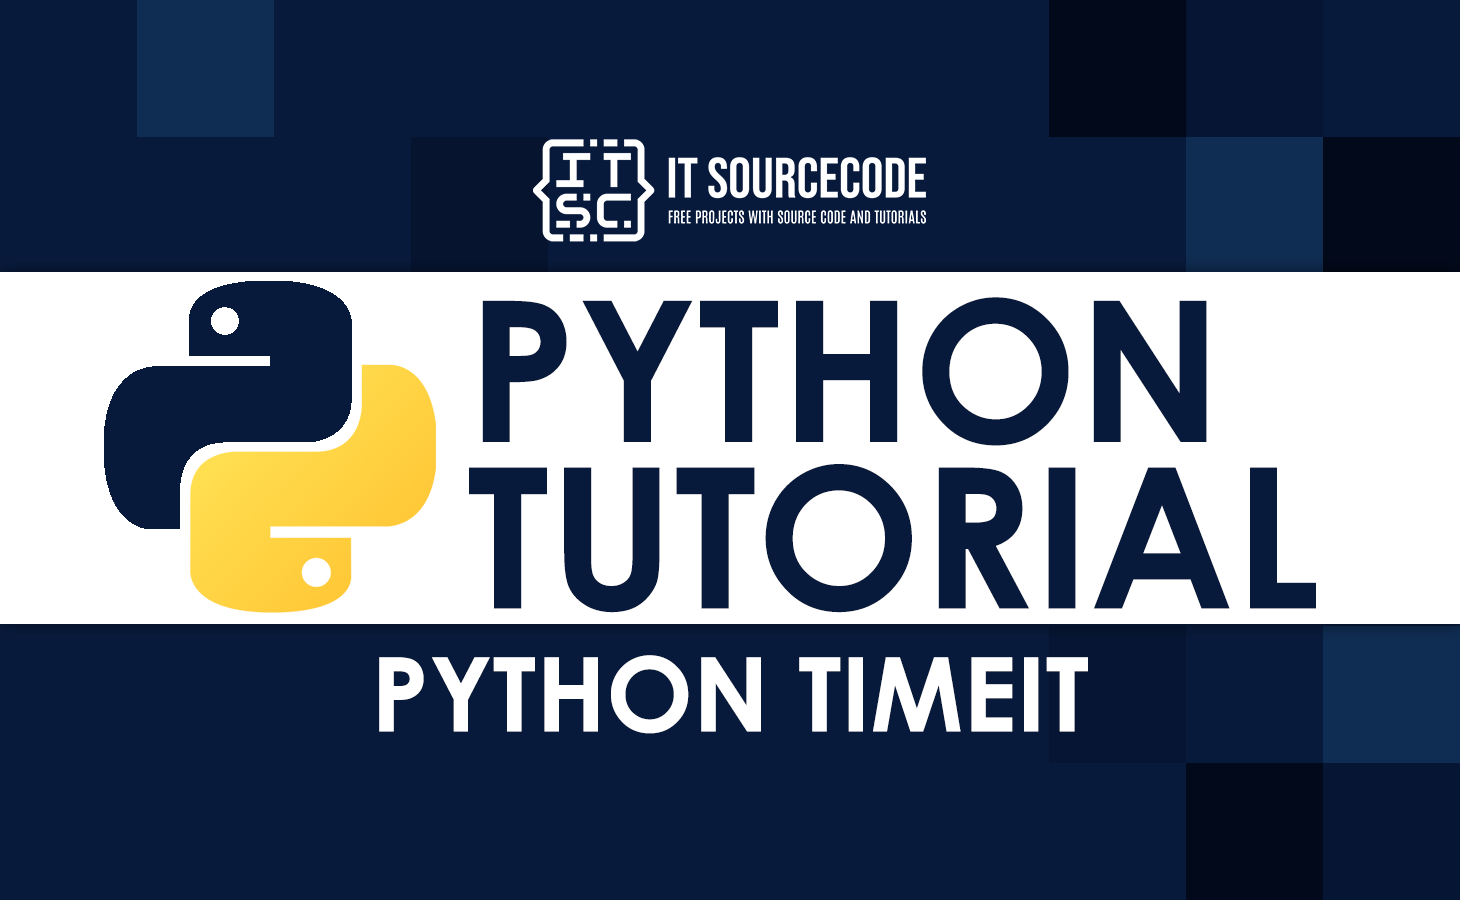 Python timeit